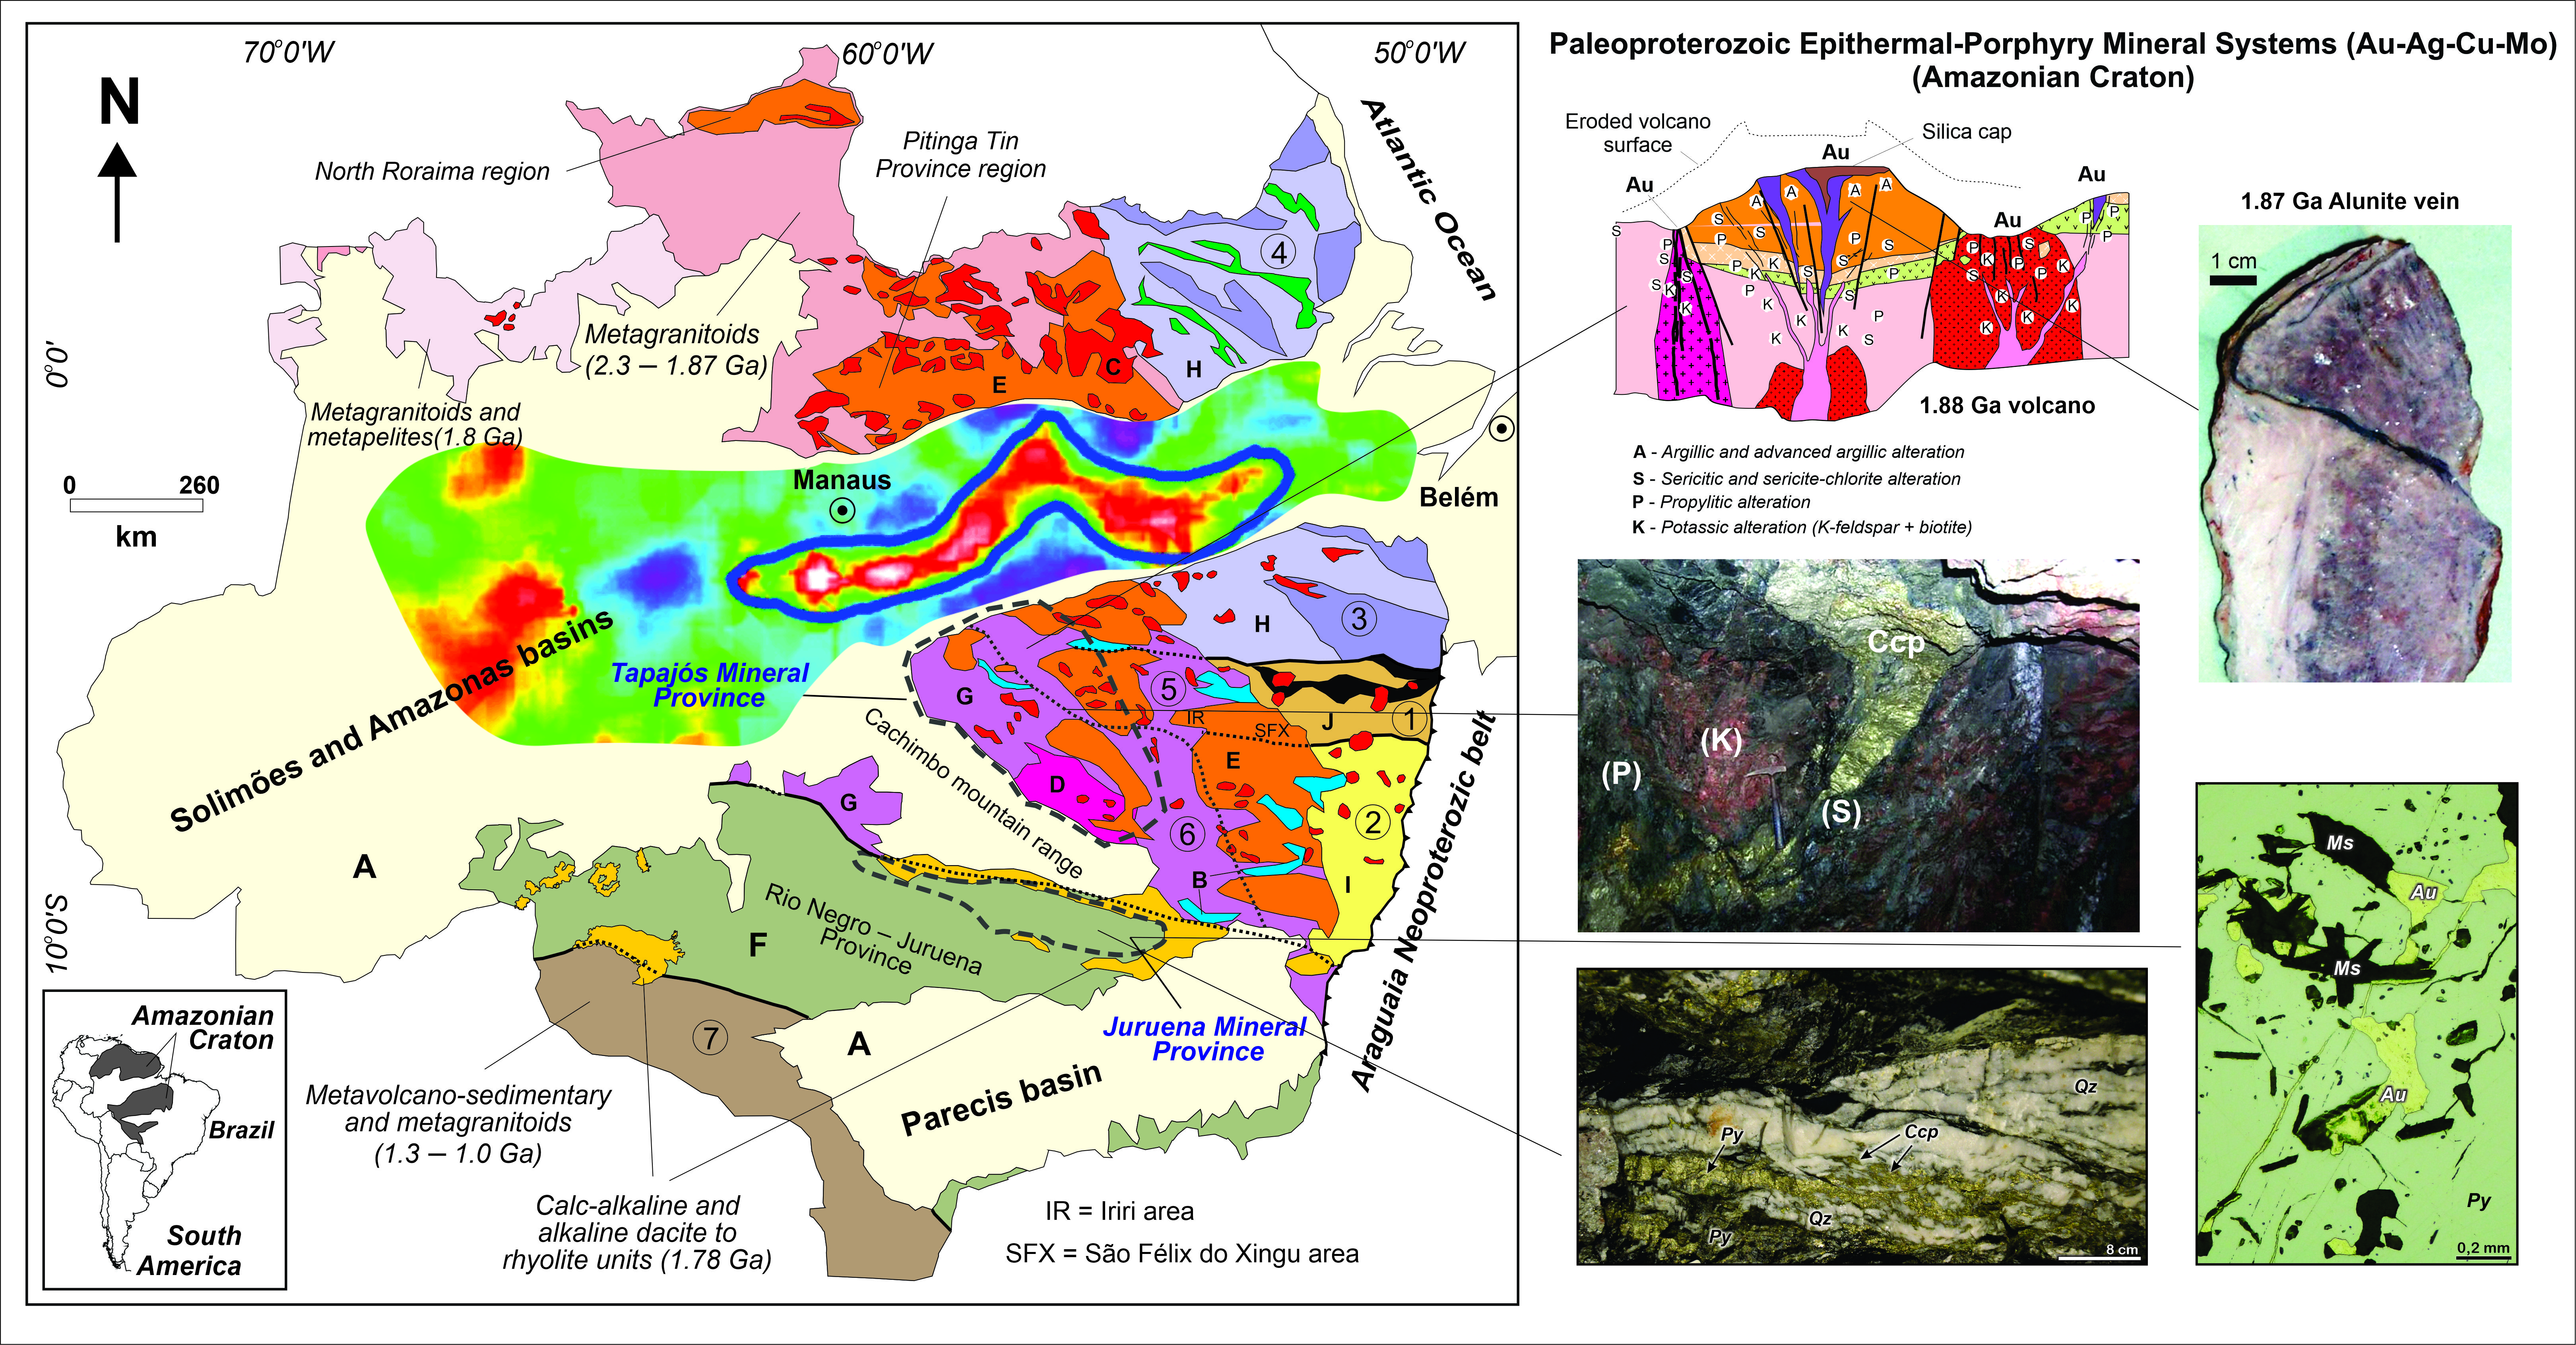 Quantitative resource assessment of hydrothermal gold deposits